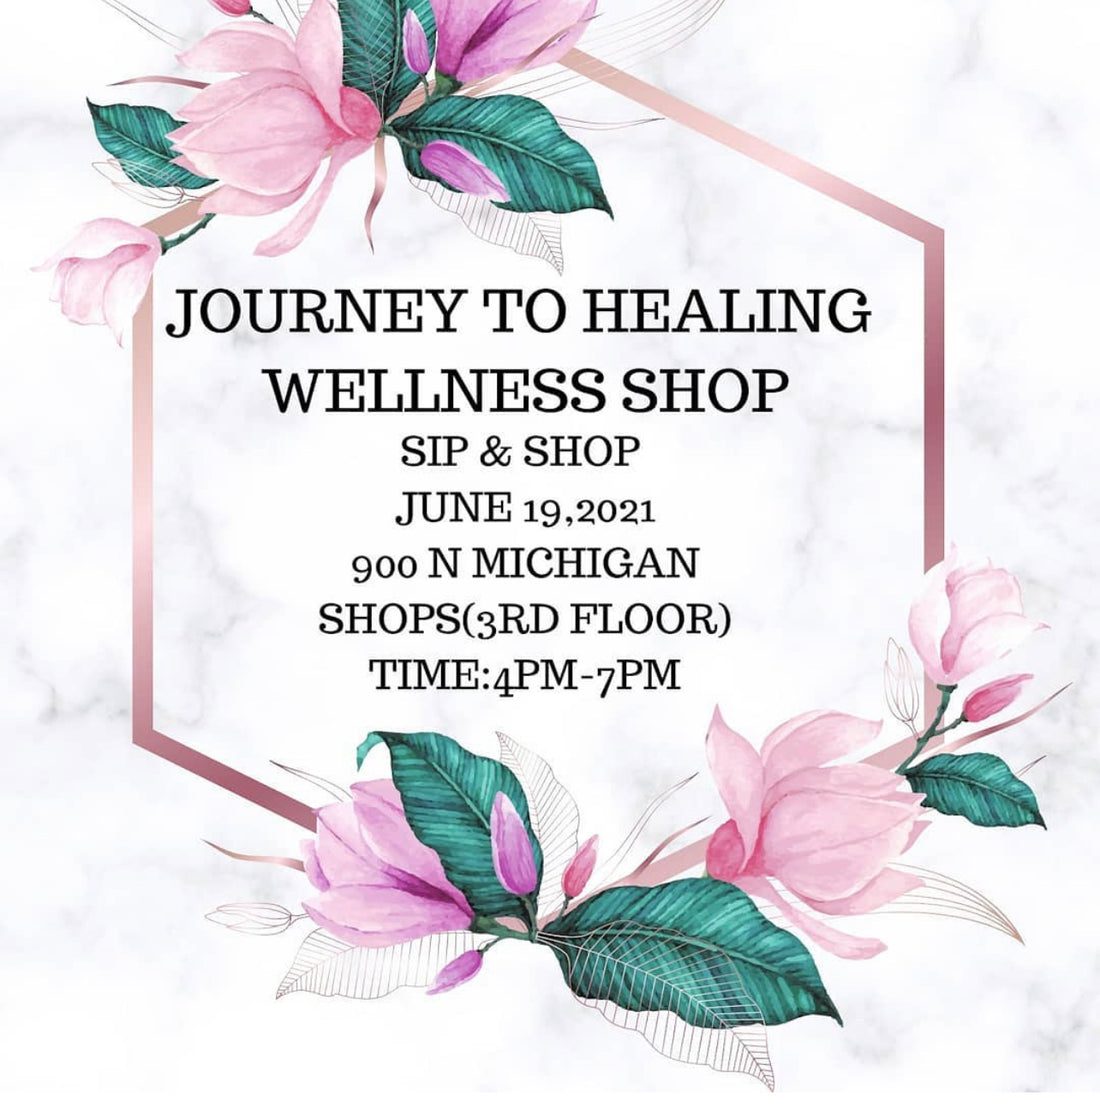 Juneteenth Event Journey to Healing!